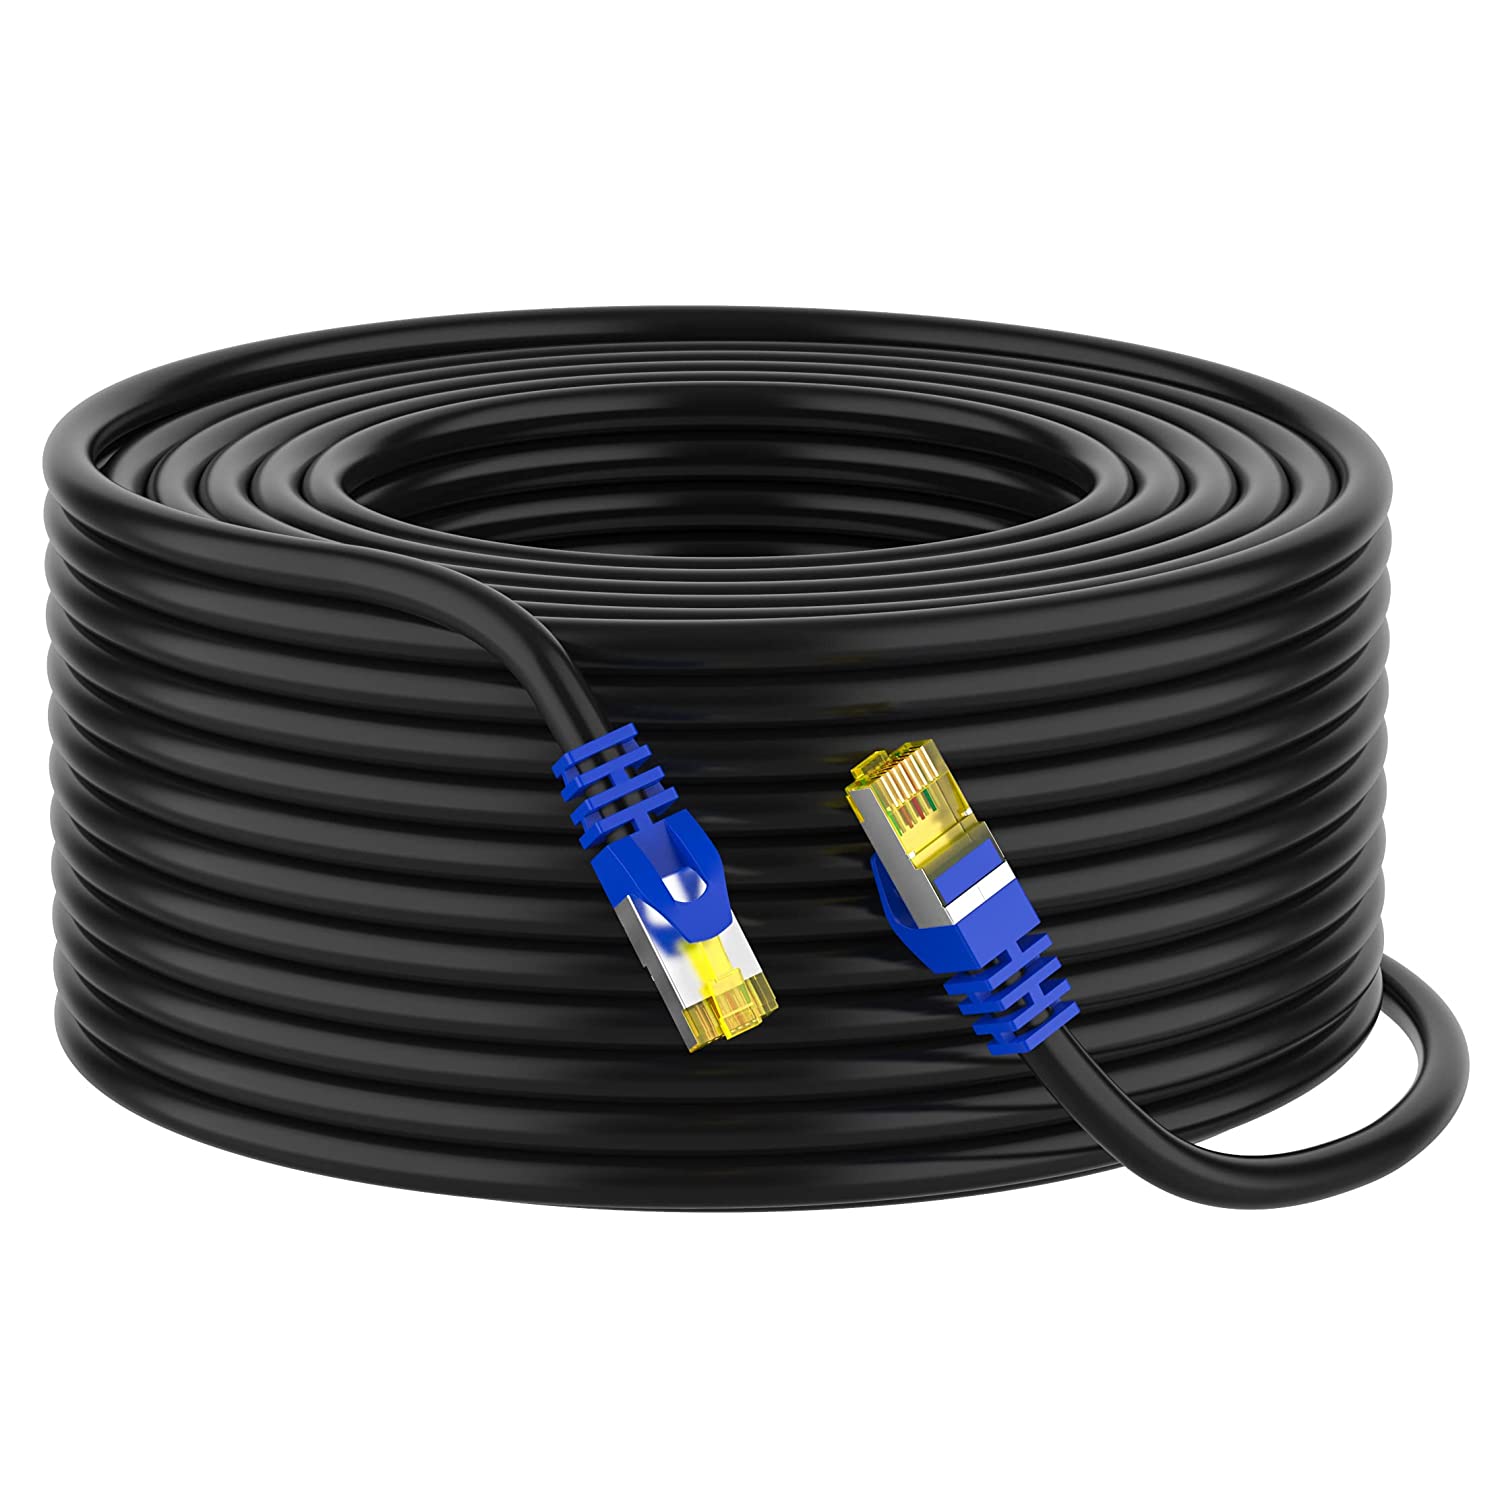 AoforzTech Ethernet cable.